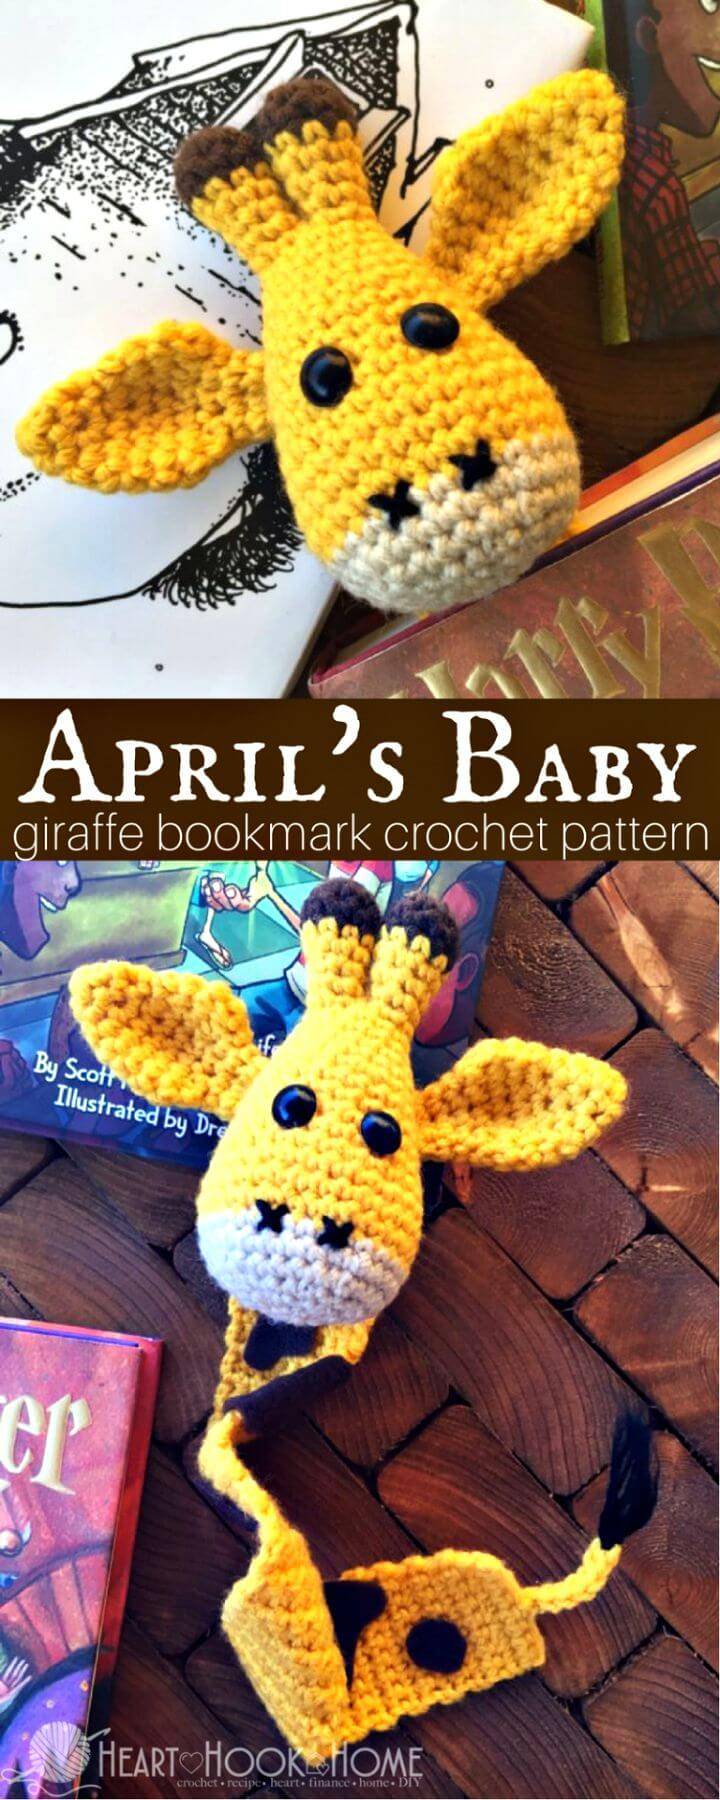 How To Crochet April’s Baby Giraffe Bookmark Amigurumi Pattern